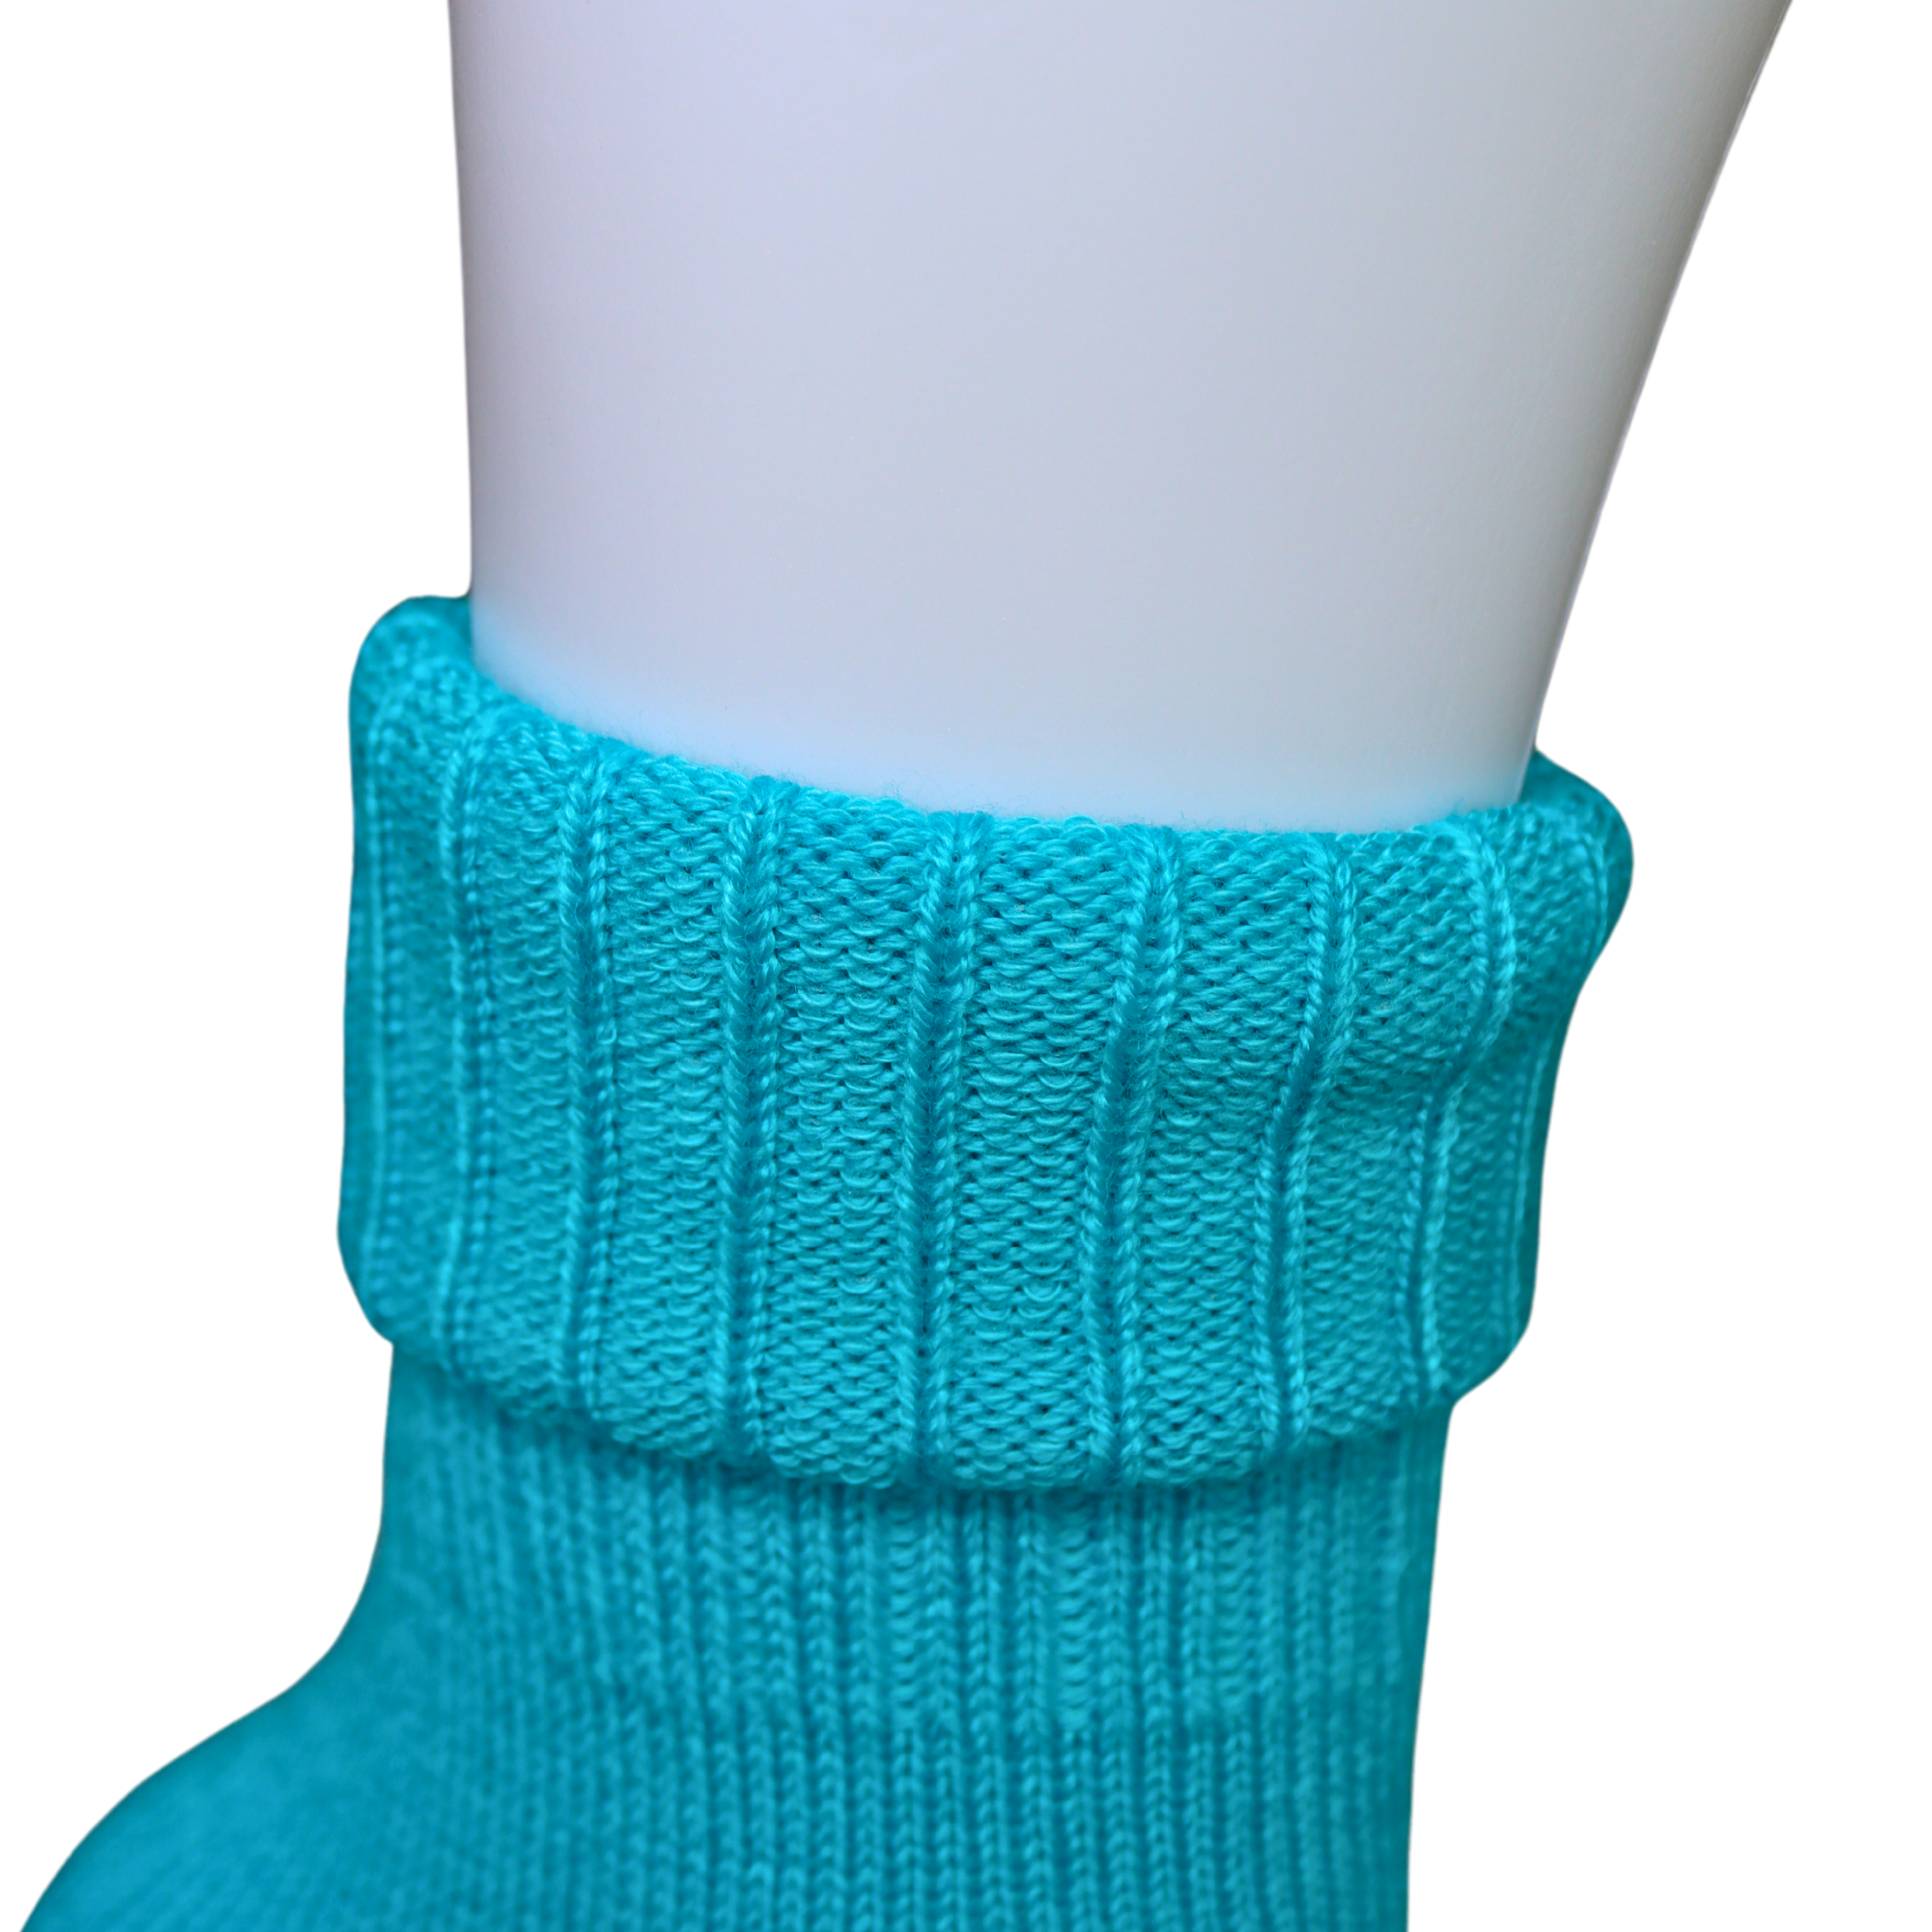 Louluu Wool Blue Colour Turn Cuff Soft Ankle Socks